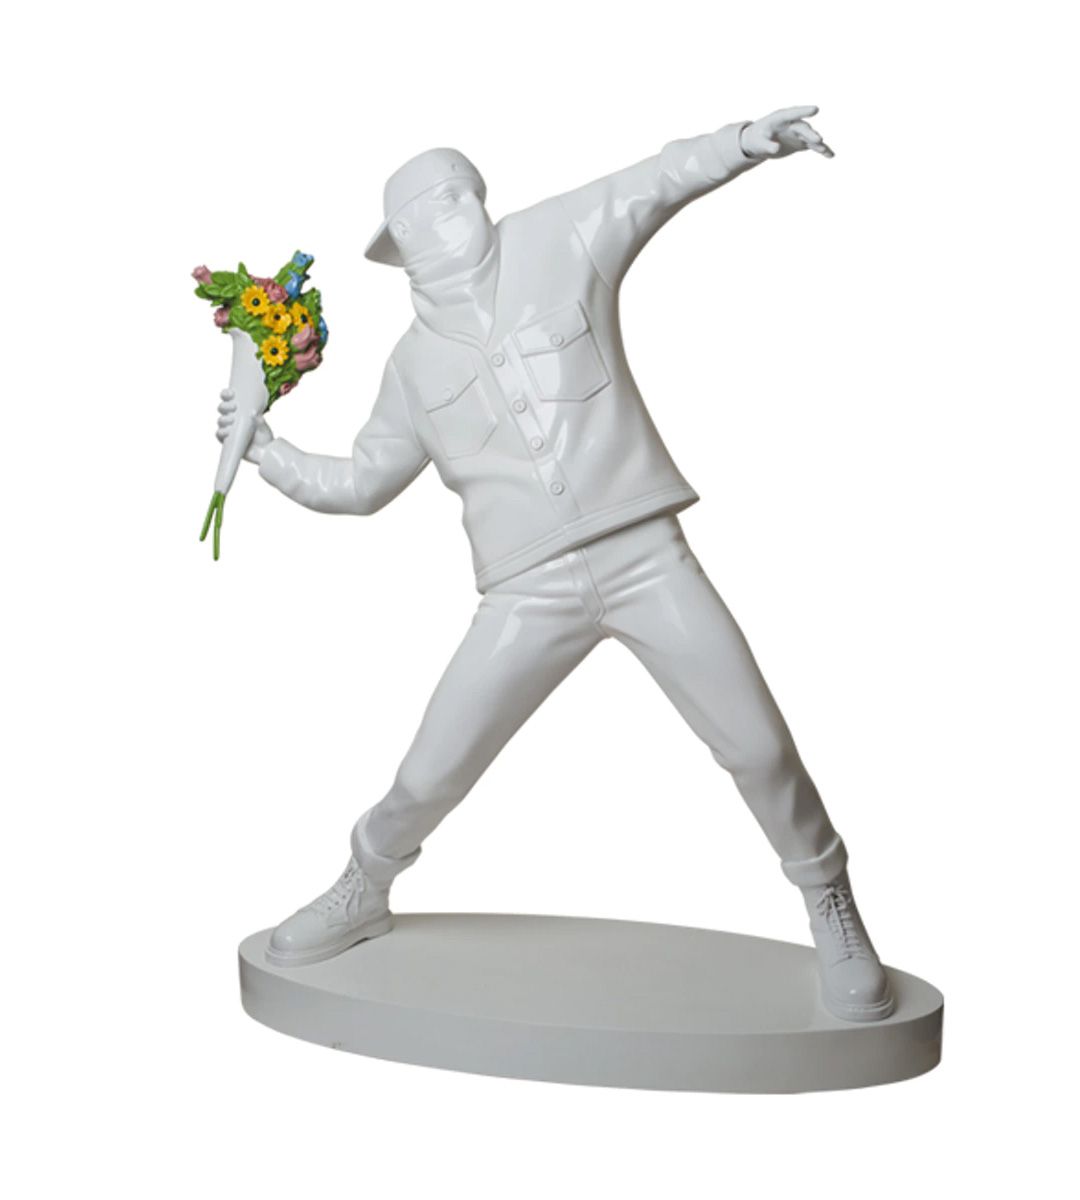 Flower Bomber Sculpture - Banksy X Medicom Toy